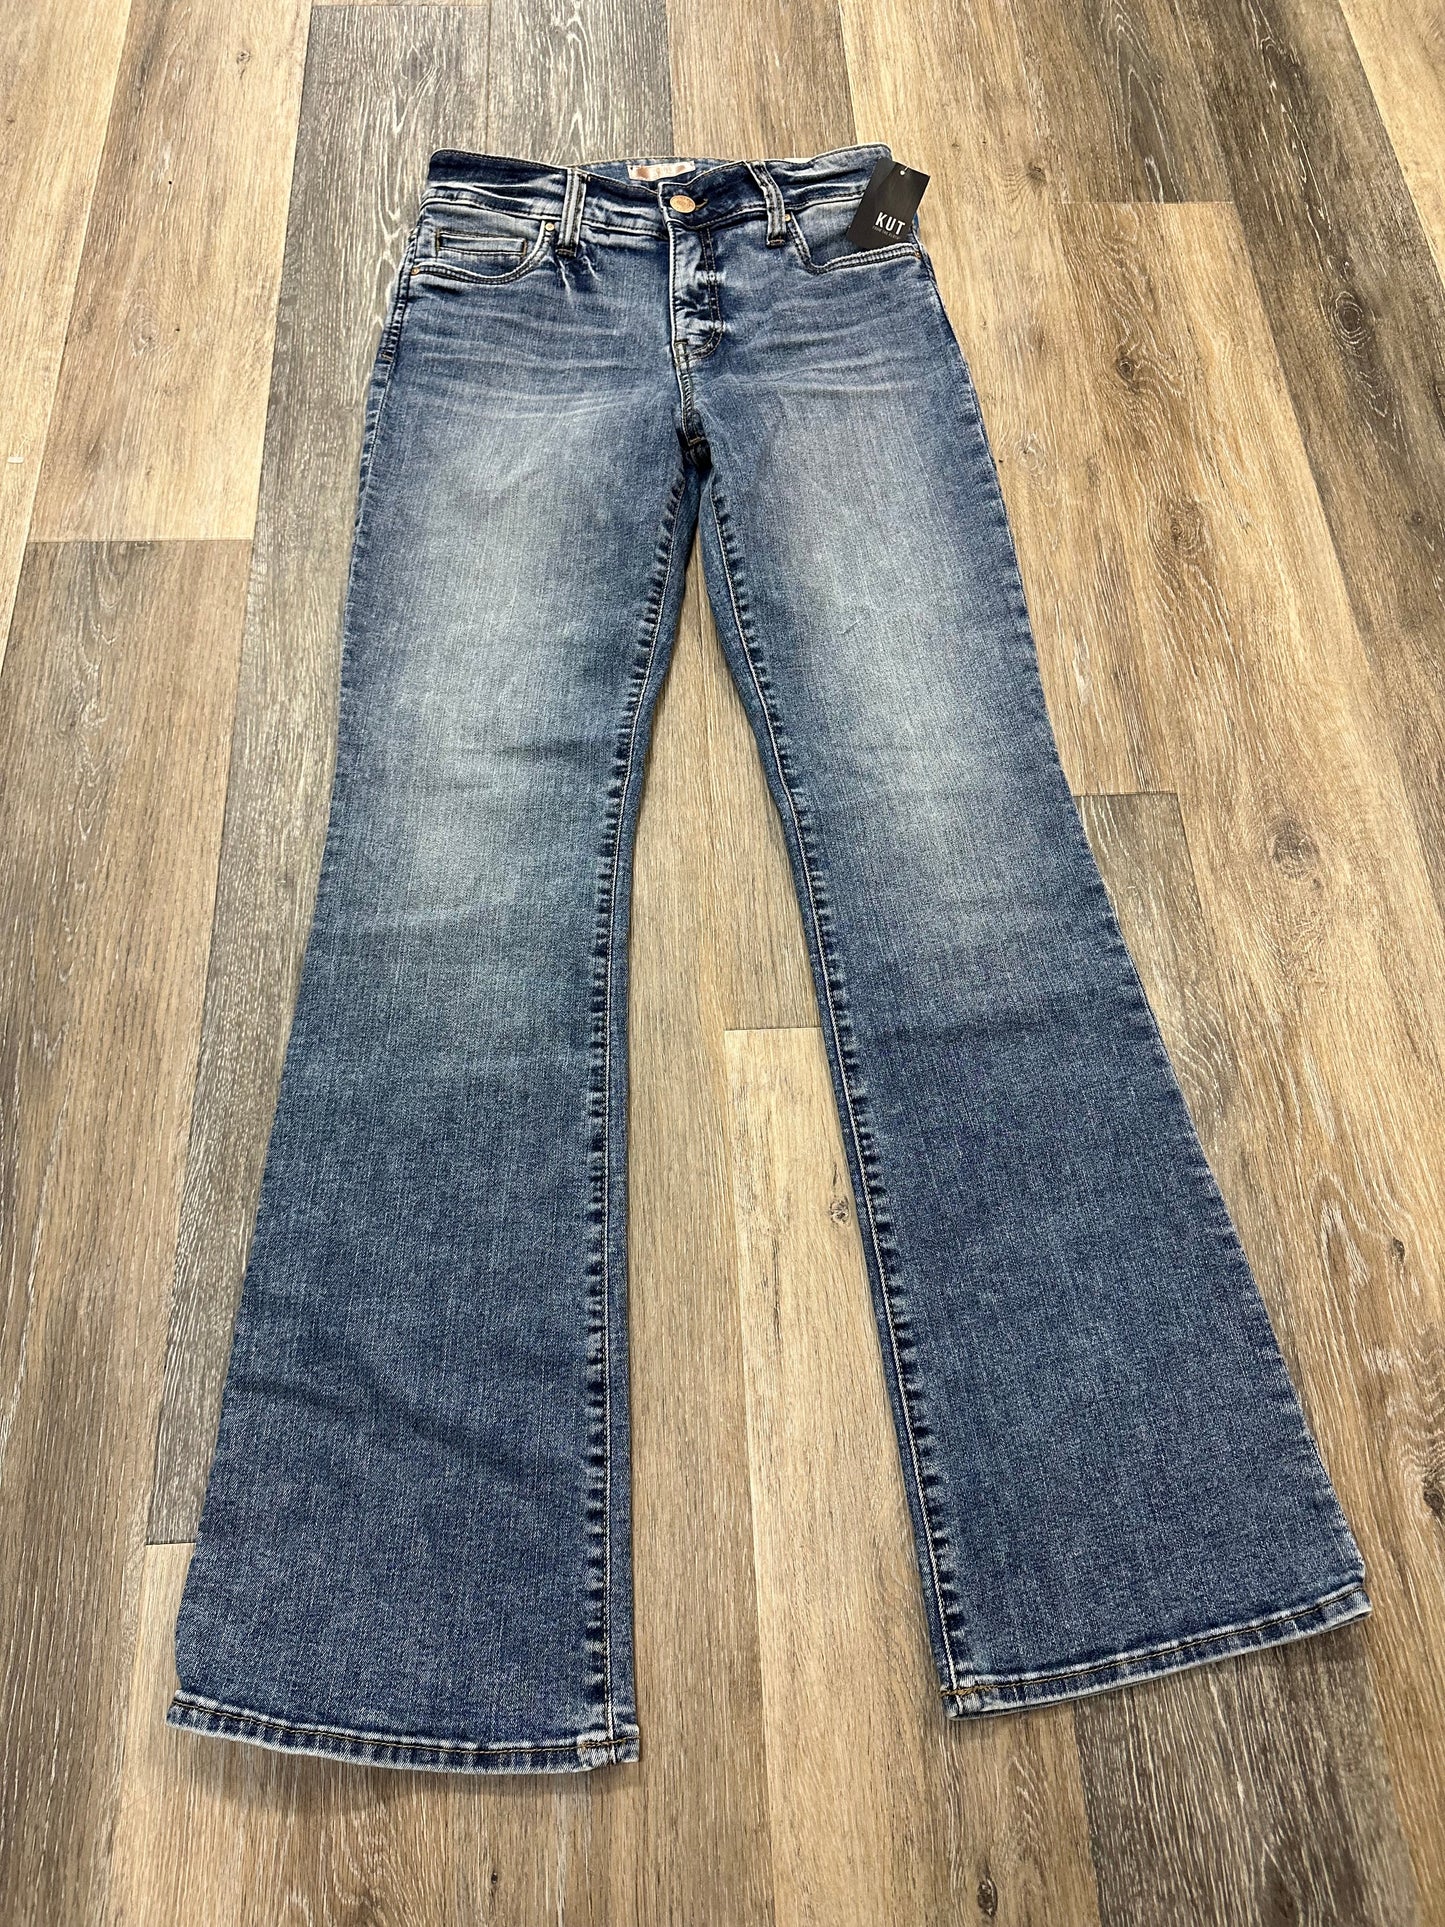 Blue Denim Jeans Flared Kut, Size 6